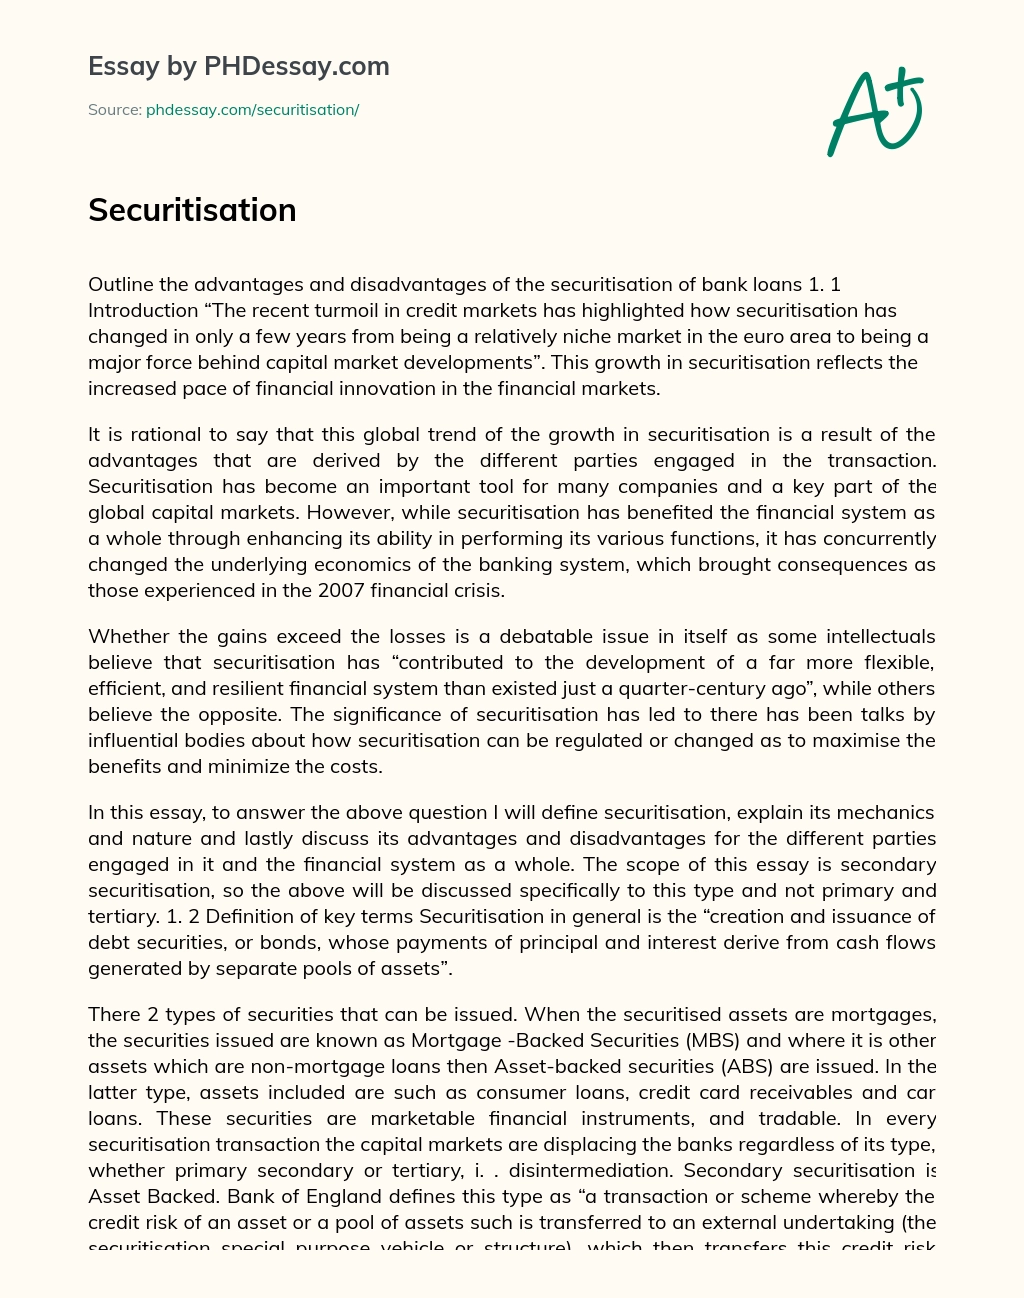 Securitisation essay